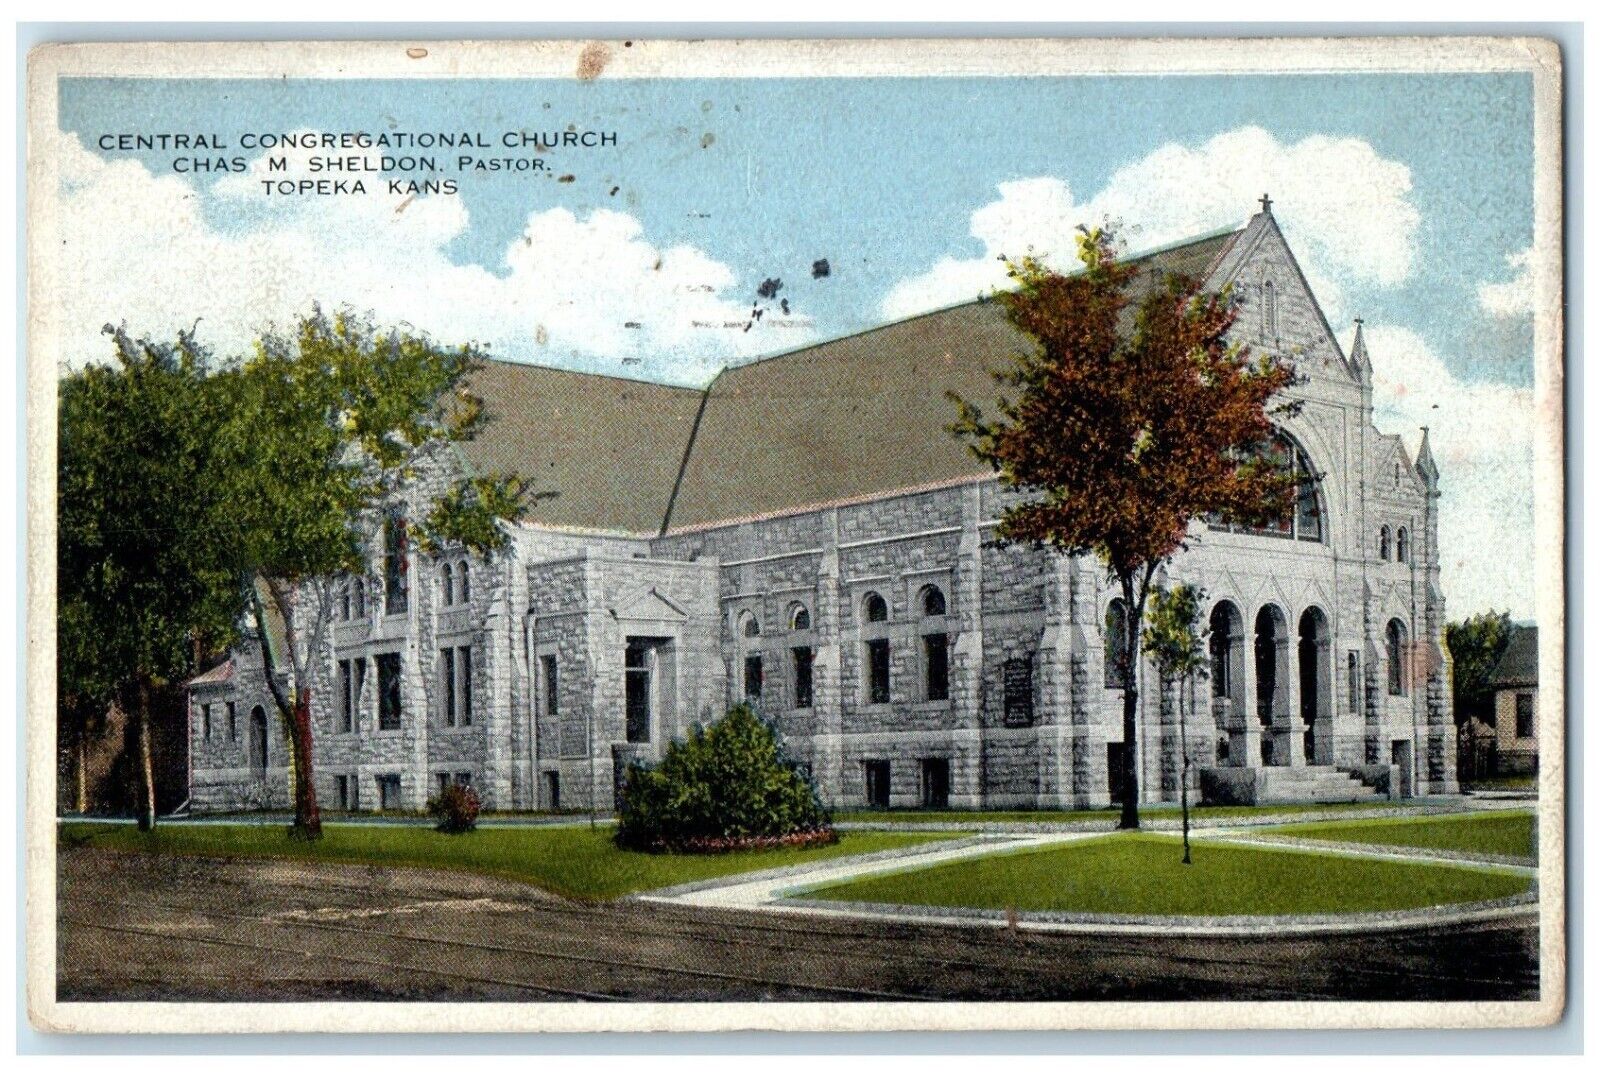 1921 Central Congregational Church Sheldon Pastor Topeka Kansas Vintage Postcard